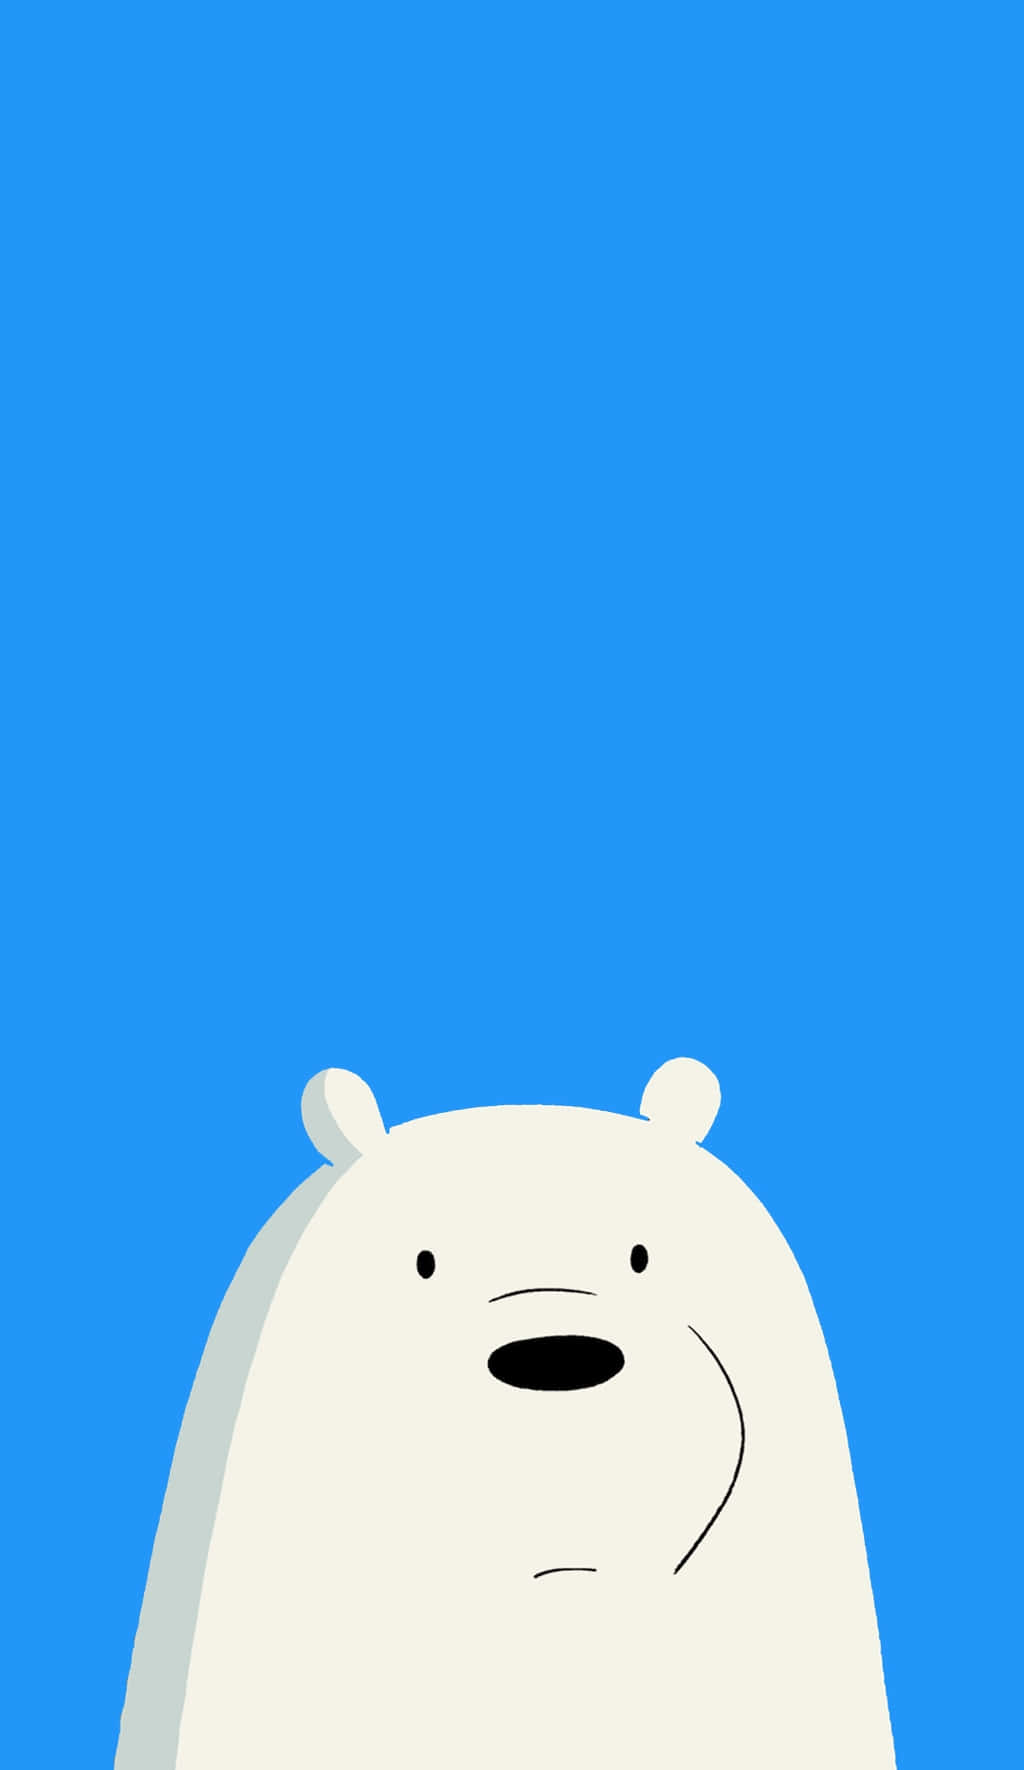 Adorable Cartoon Polar Bear Chilling on Ice Wallpaper